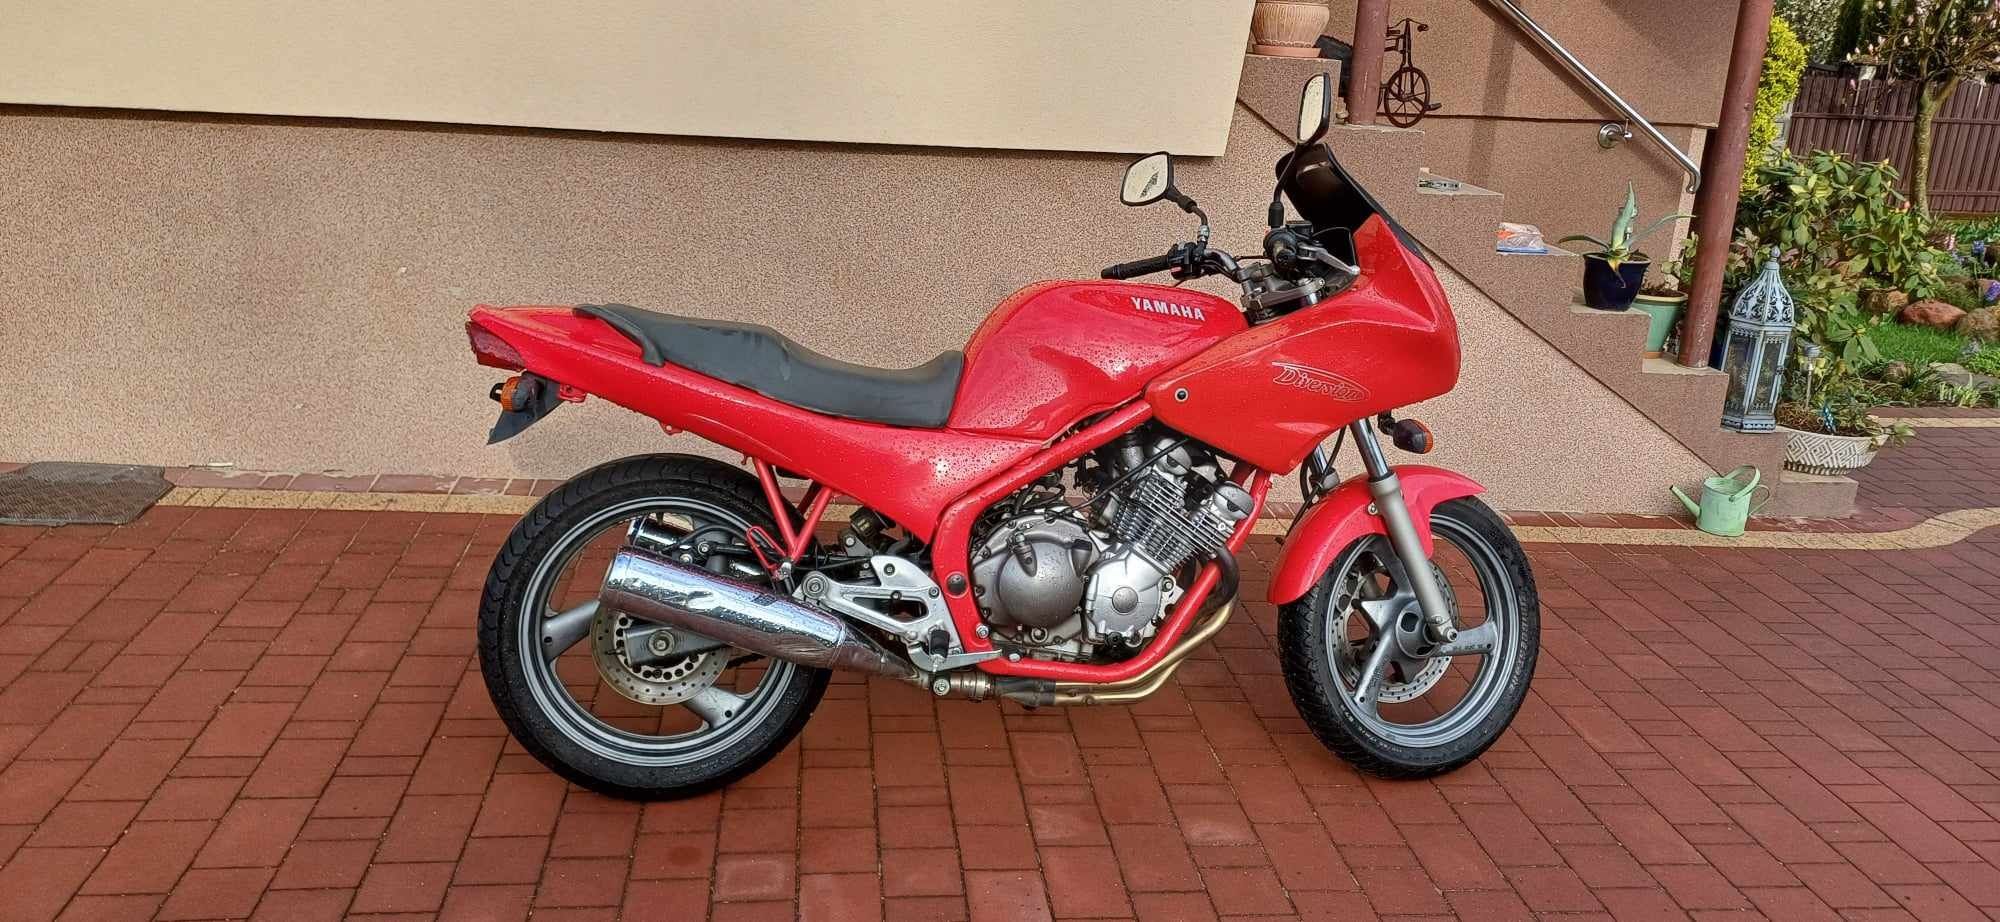 Sprzedam motory motocykle Yamaha Diversion XJ 600 S